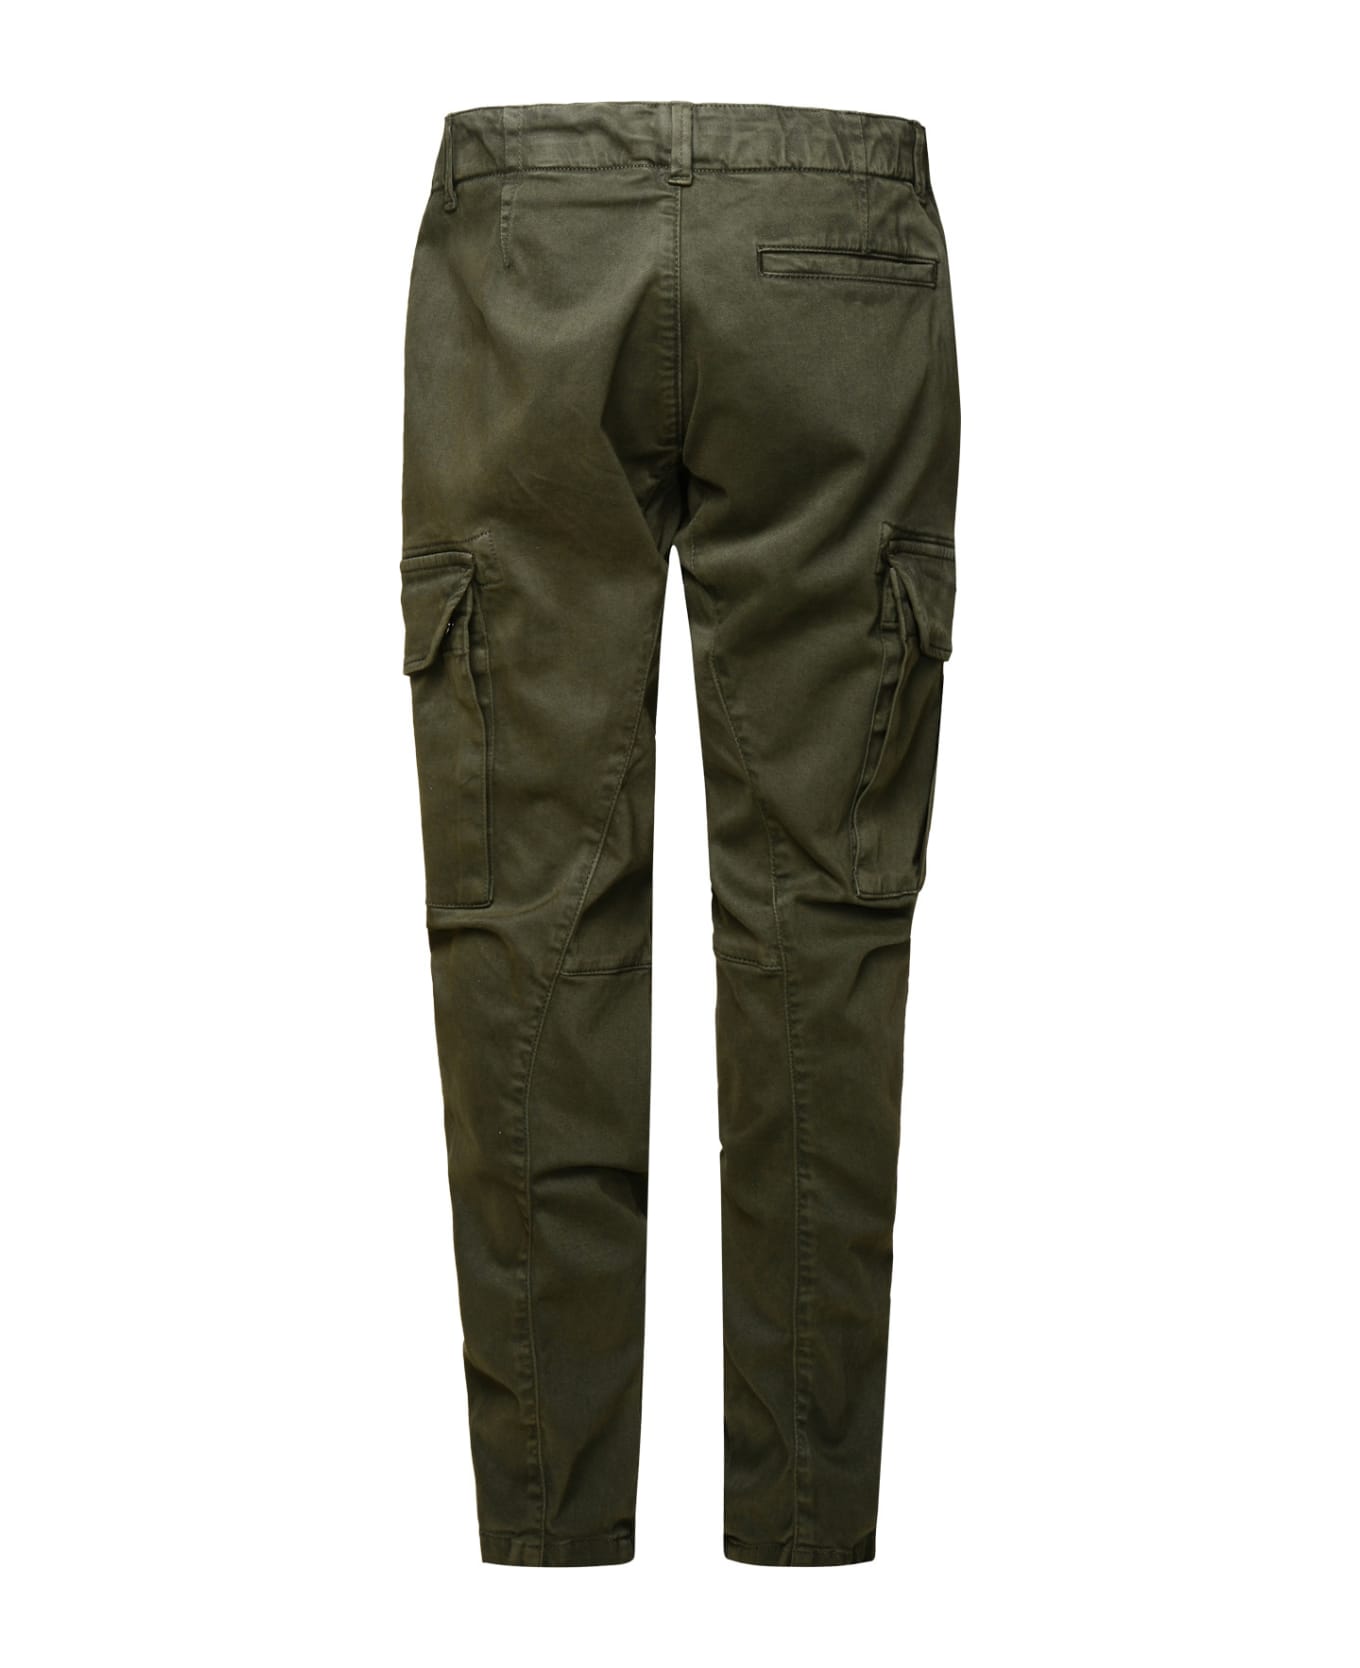 C.P. Company Green Cotton Pants - Green ボトムス